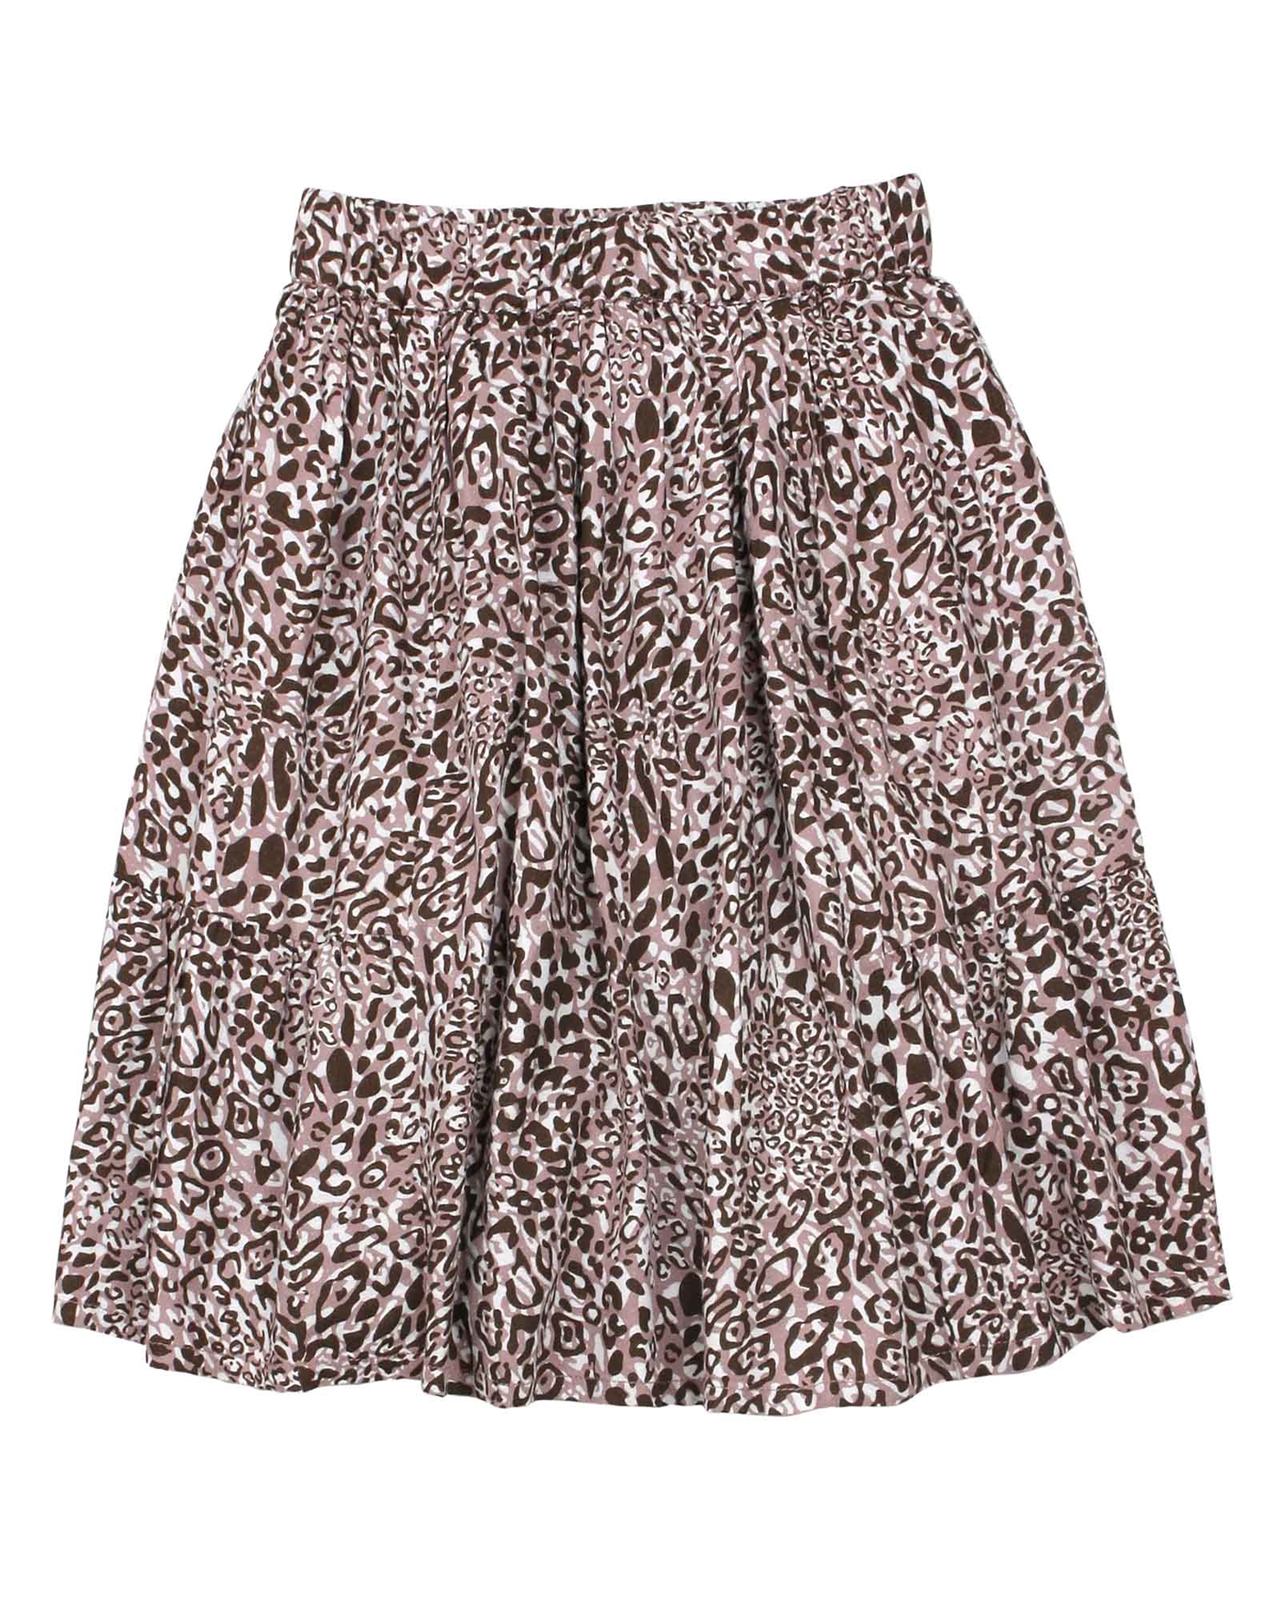 Creamie Girl's Skirt in Leopard Print - Creamie - Creamie Spring Summer ...